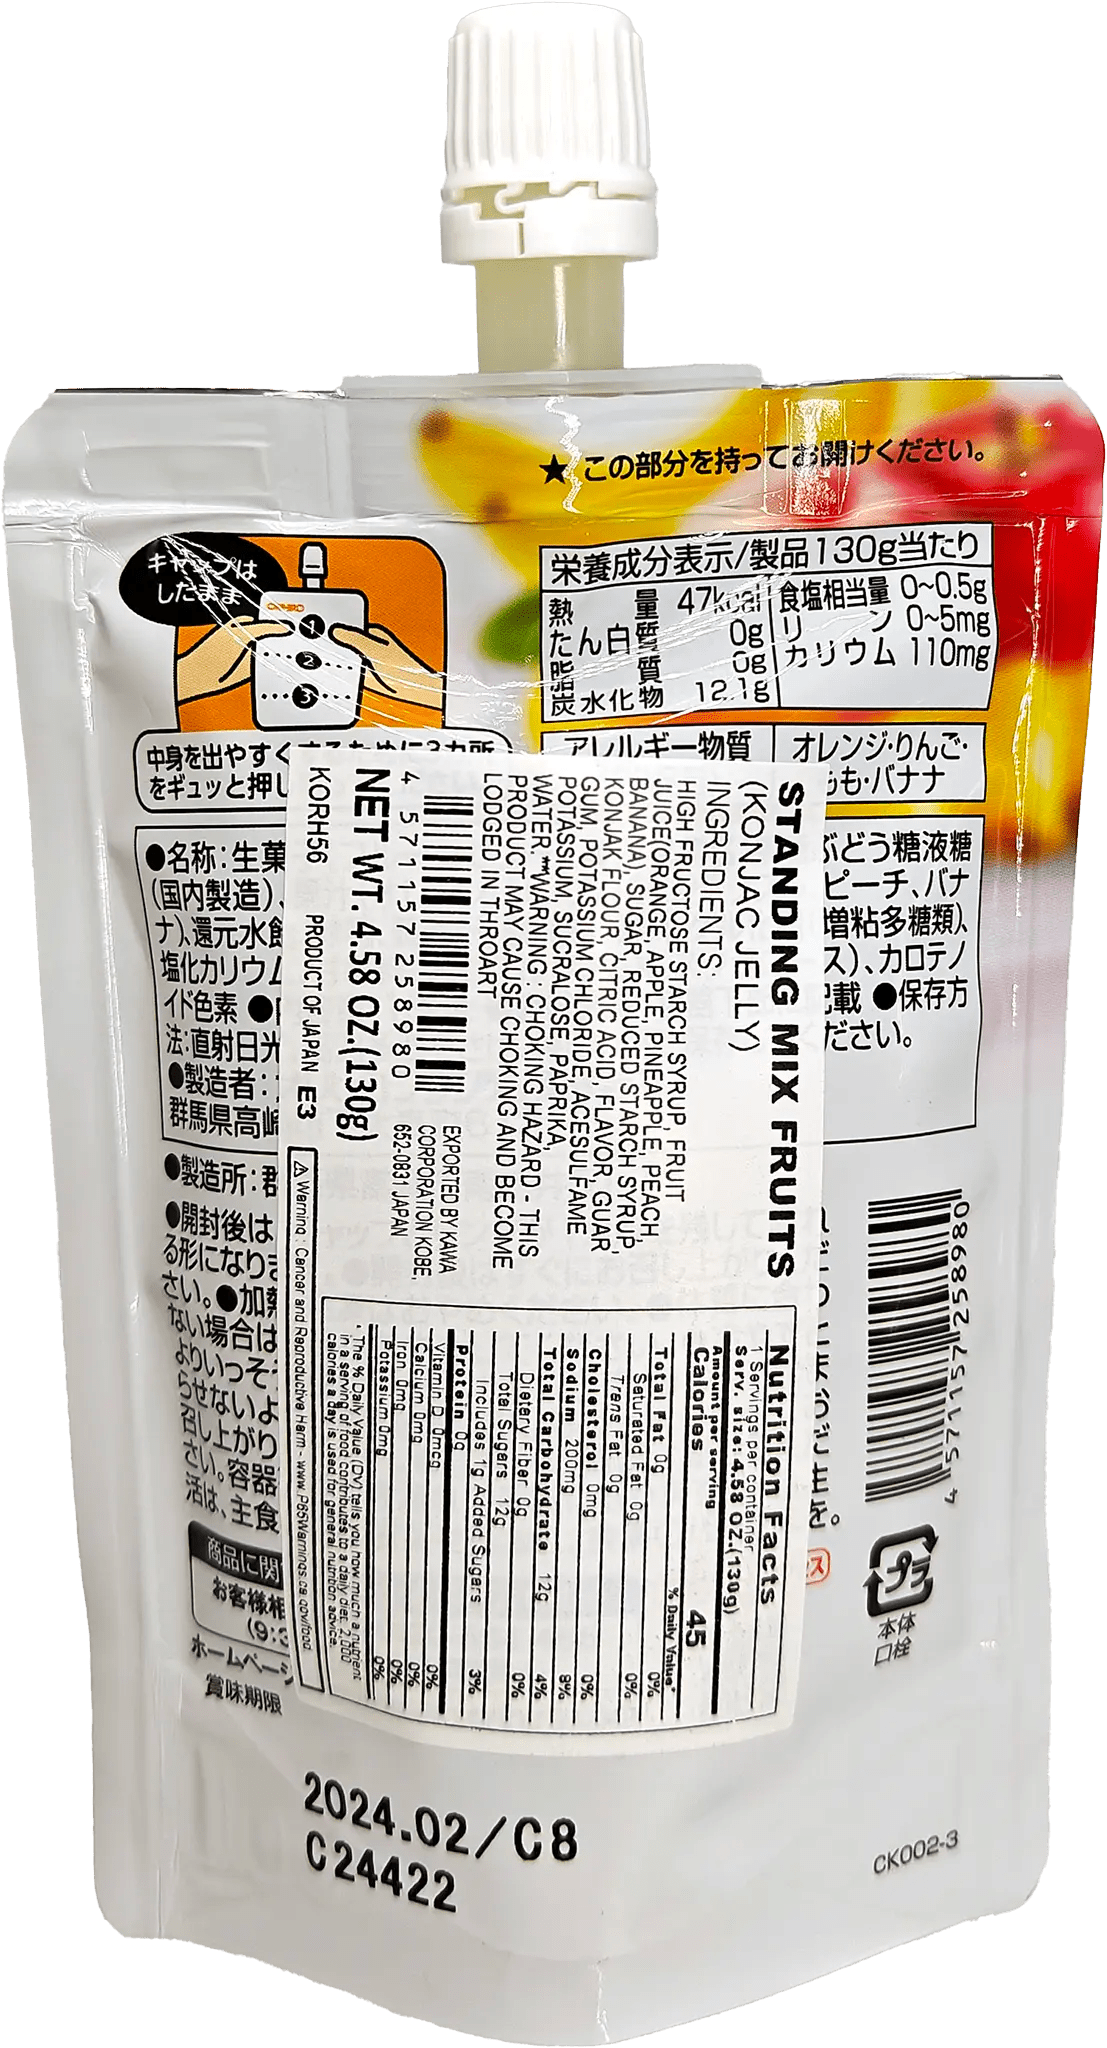 Orihiro Purunto Konjac Jelly Drink Mix Fruits 4.58 oz - Tokyo Central - Candy - Orihiro -